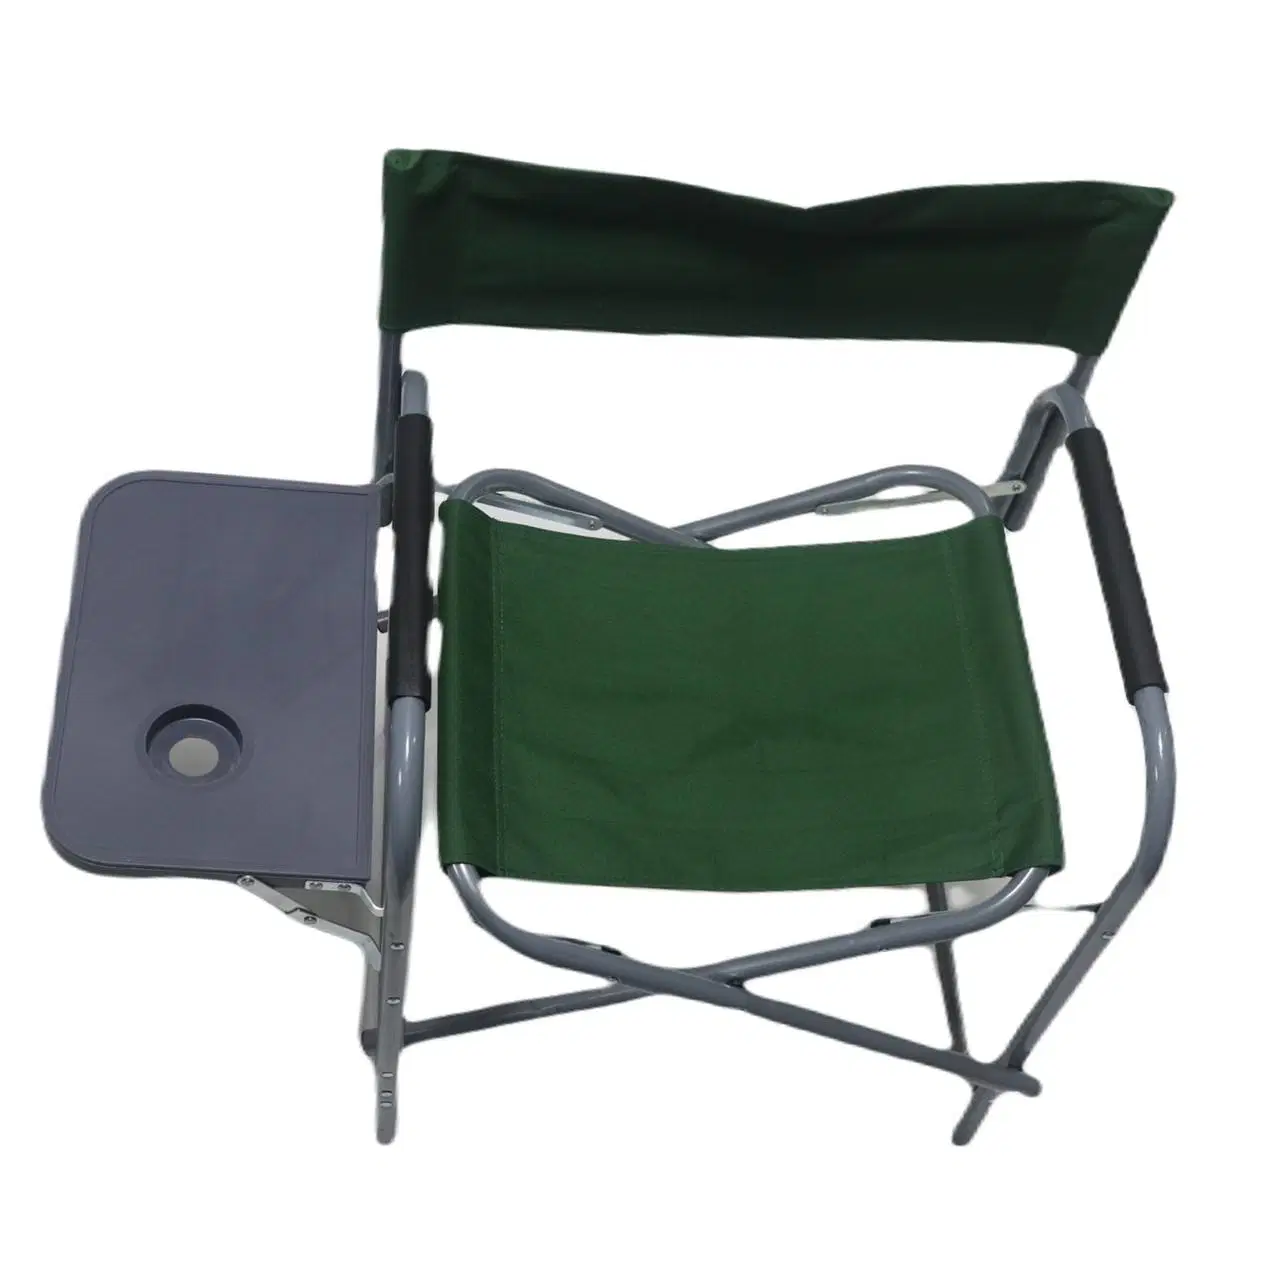 Camping Caminhadas cadeiras de Pesca Ducary carp, Portátil Outdoor Steel Folding Camping cadeiras com Mesa lateral